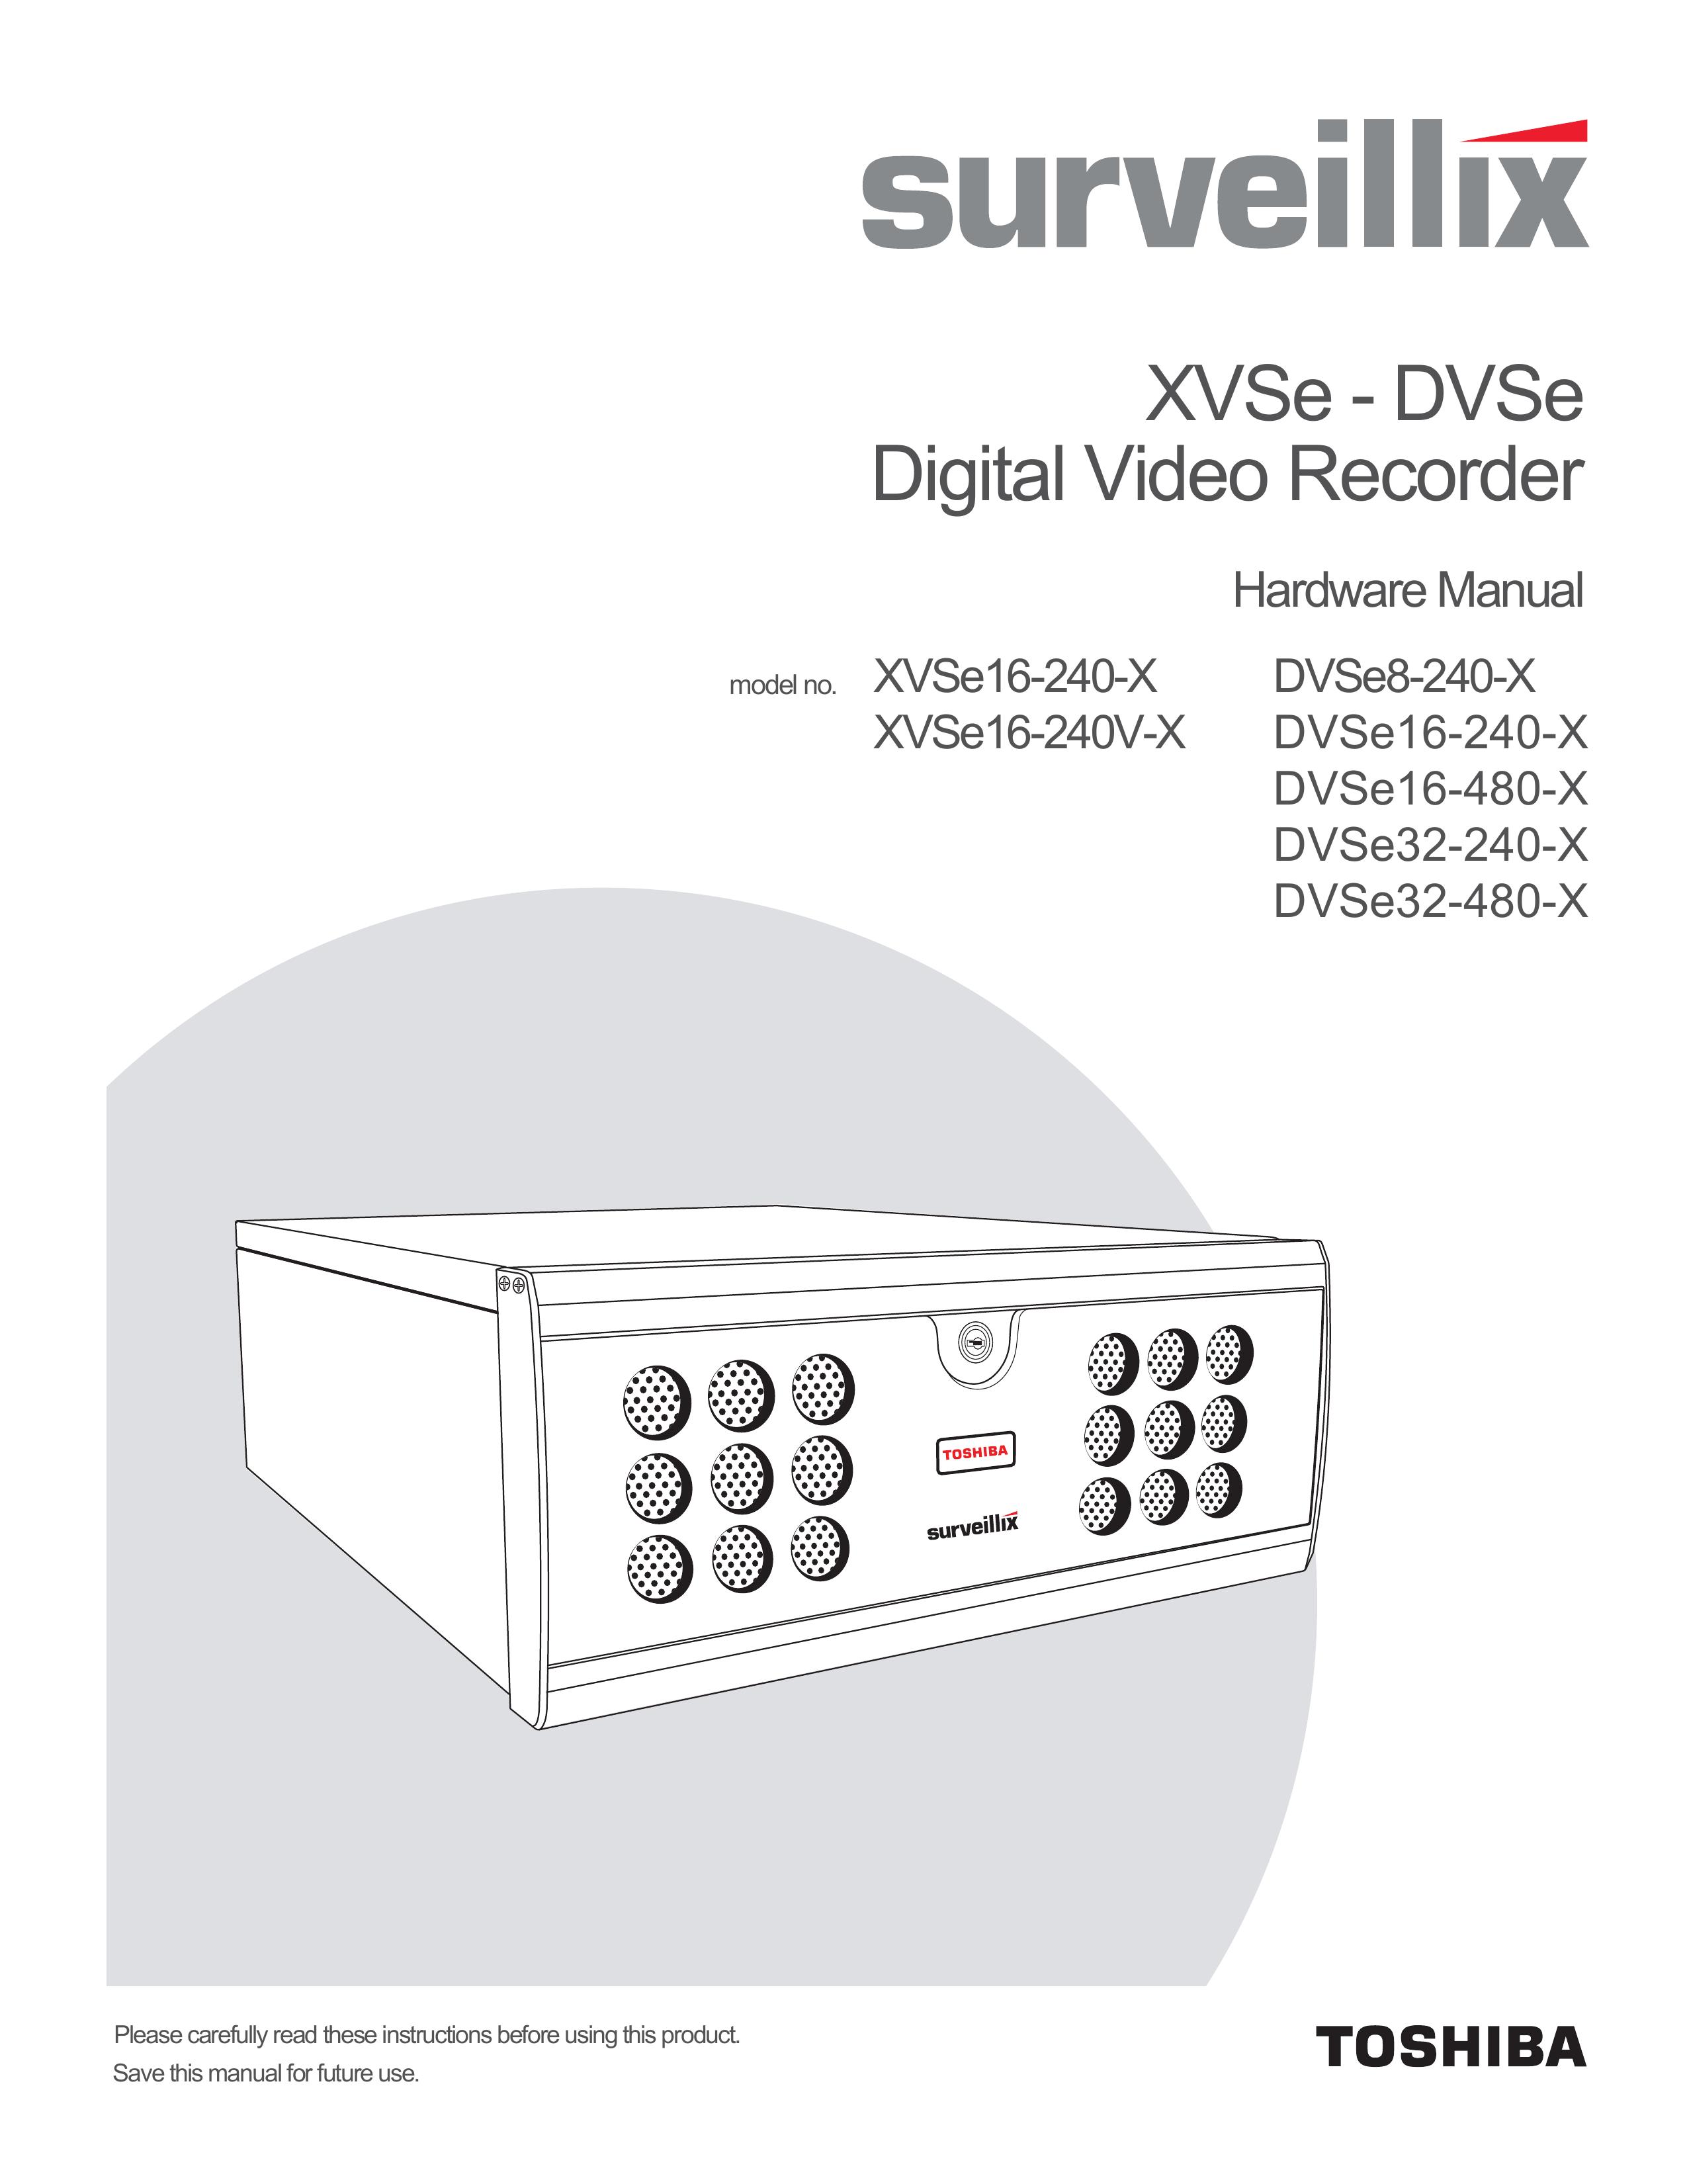 Toshiba DVSe16-240-X Digital Photo Keychain User Manual